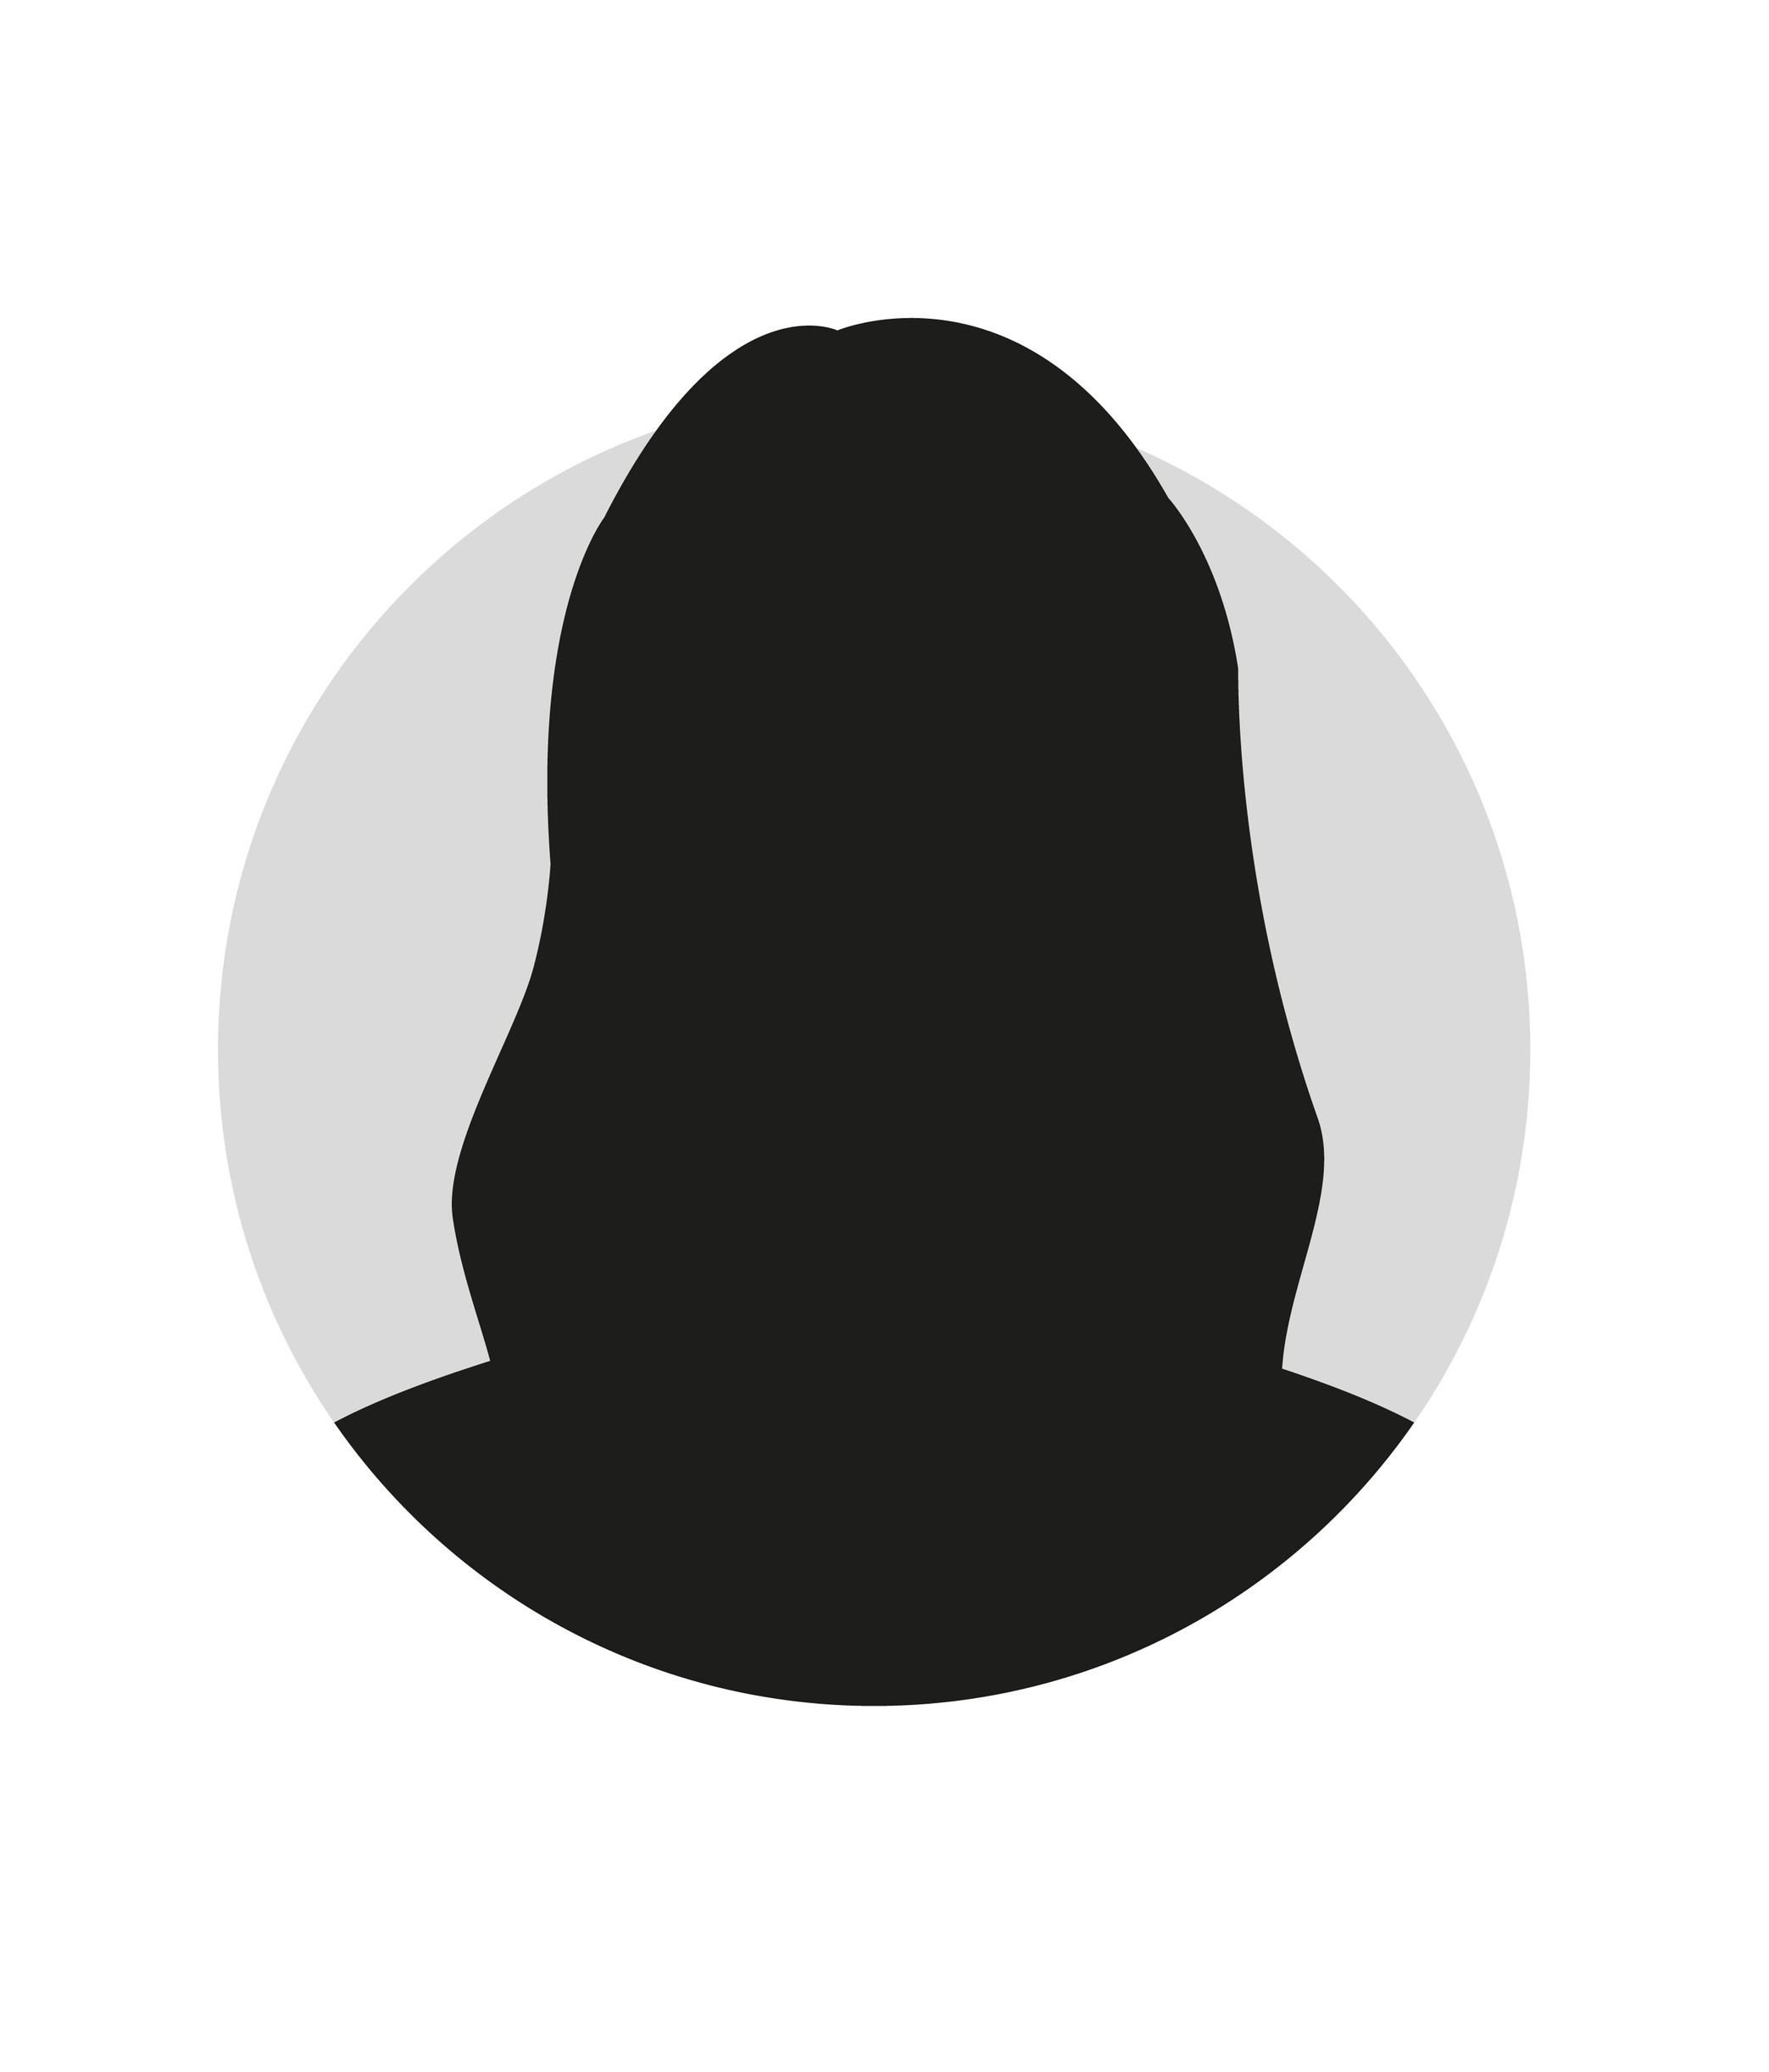 female avatar silhouette